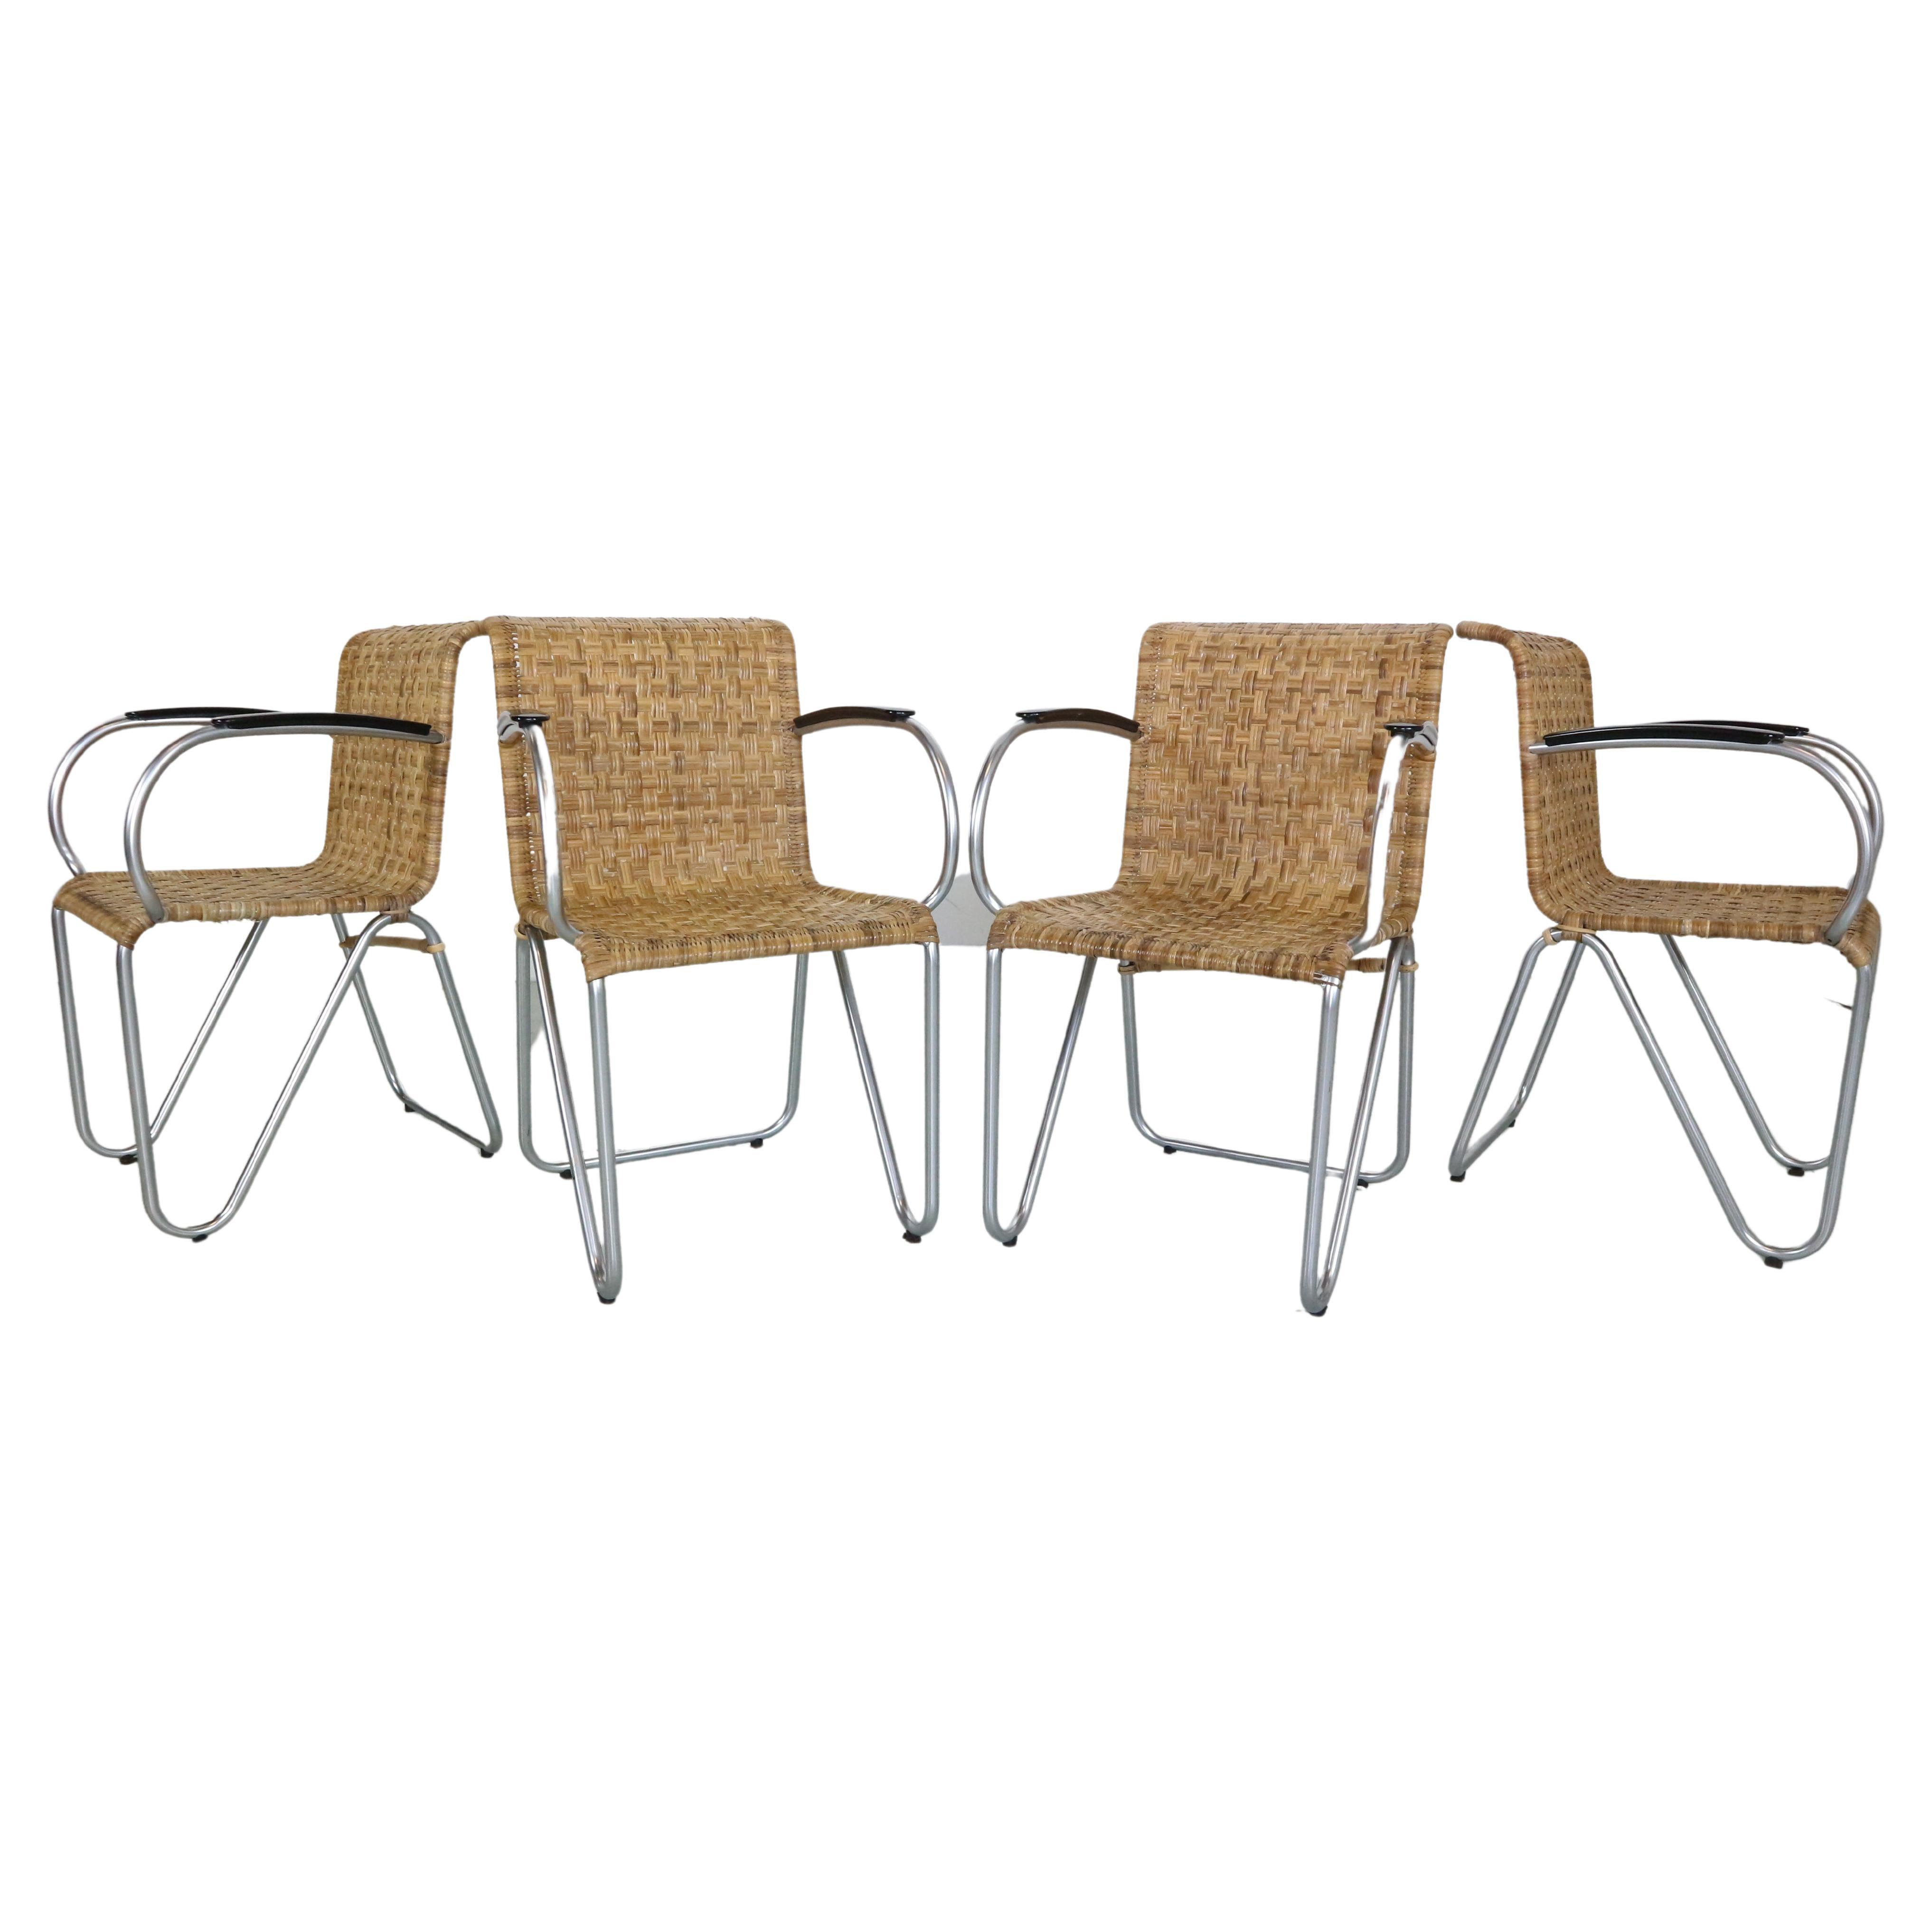 Gispen Set Of 4 Diagonal Wicker& Tube Frame Armchairs, 1930's Dutch Design